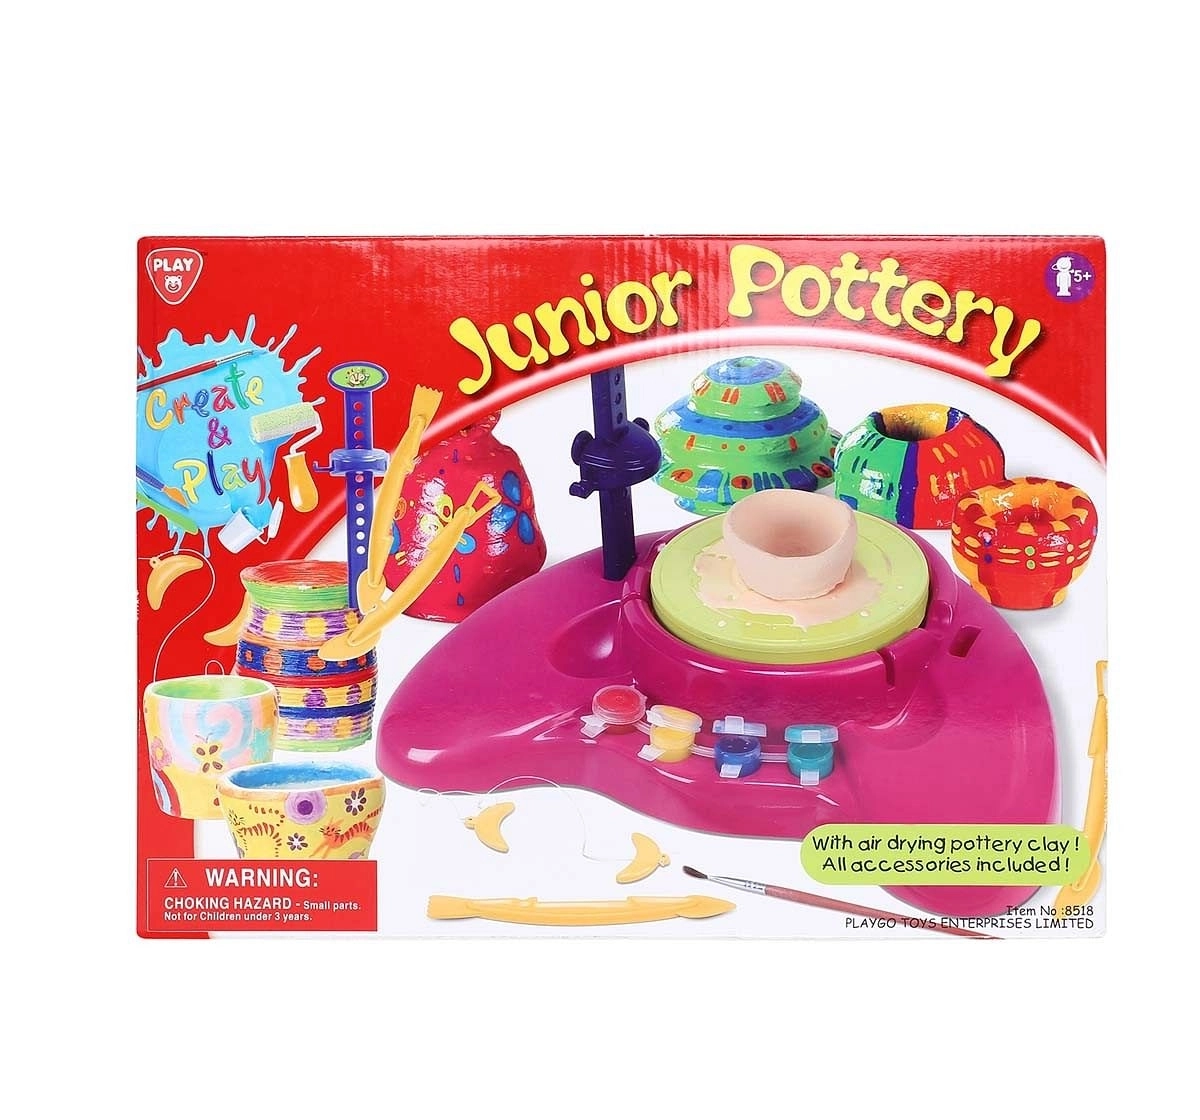 Playgo-Junior Pottery B/O DIY Art & Craft Kits for Kids age 5Y+ 